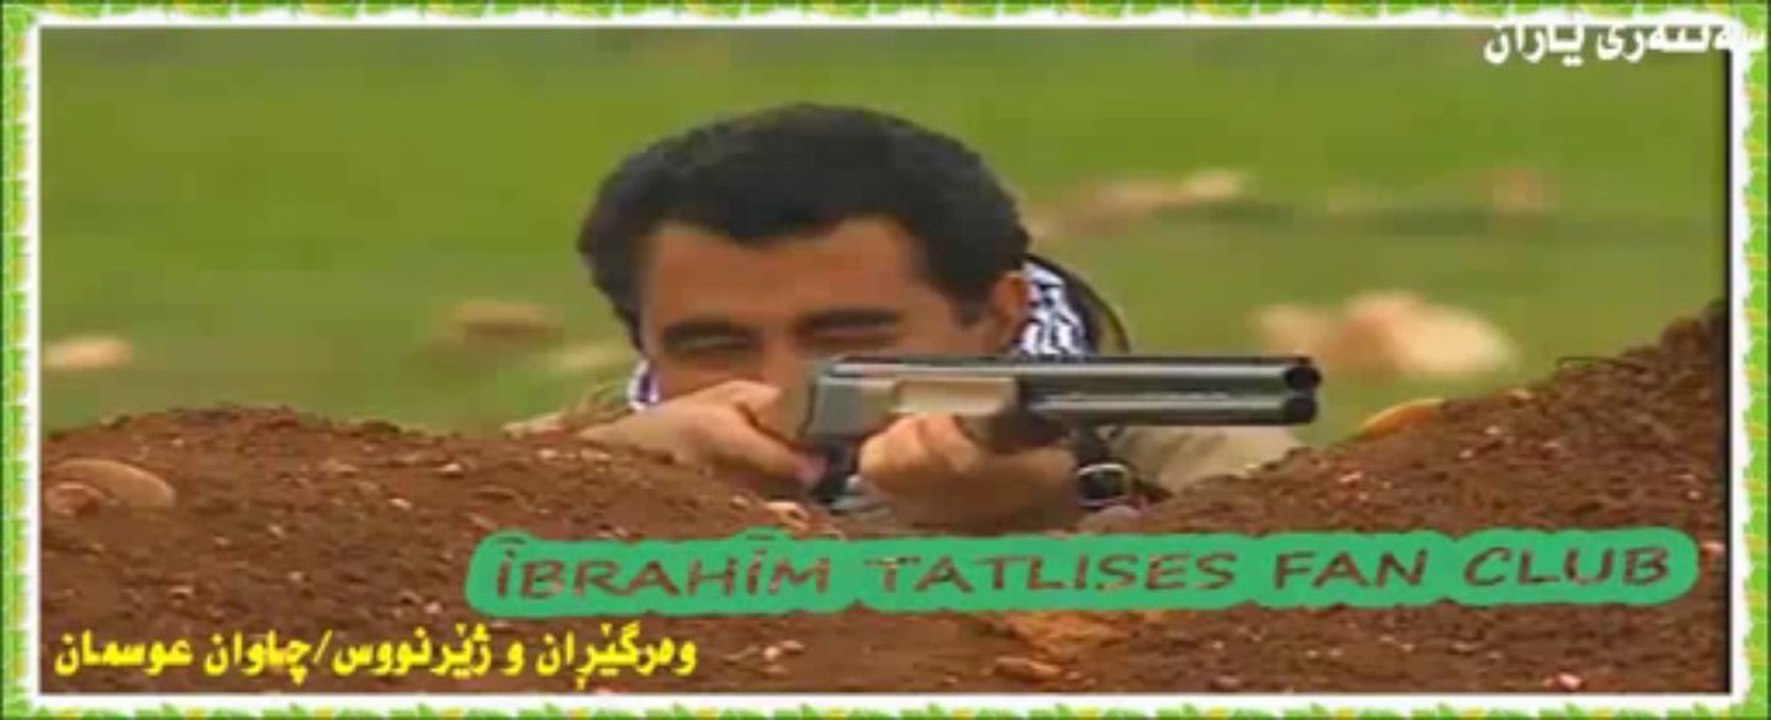 ibrahim--tatlises--laylmlayl--kurdish